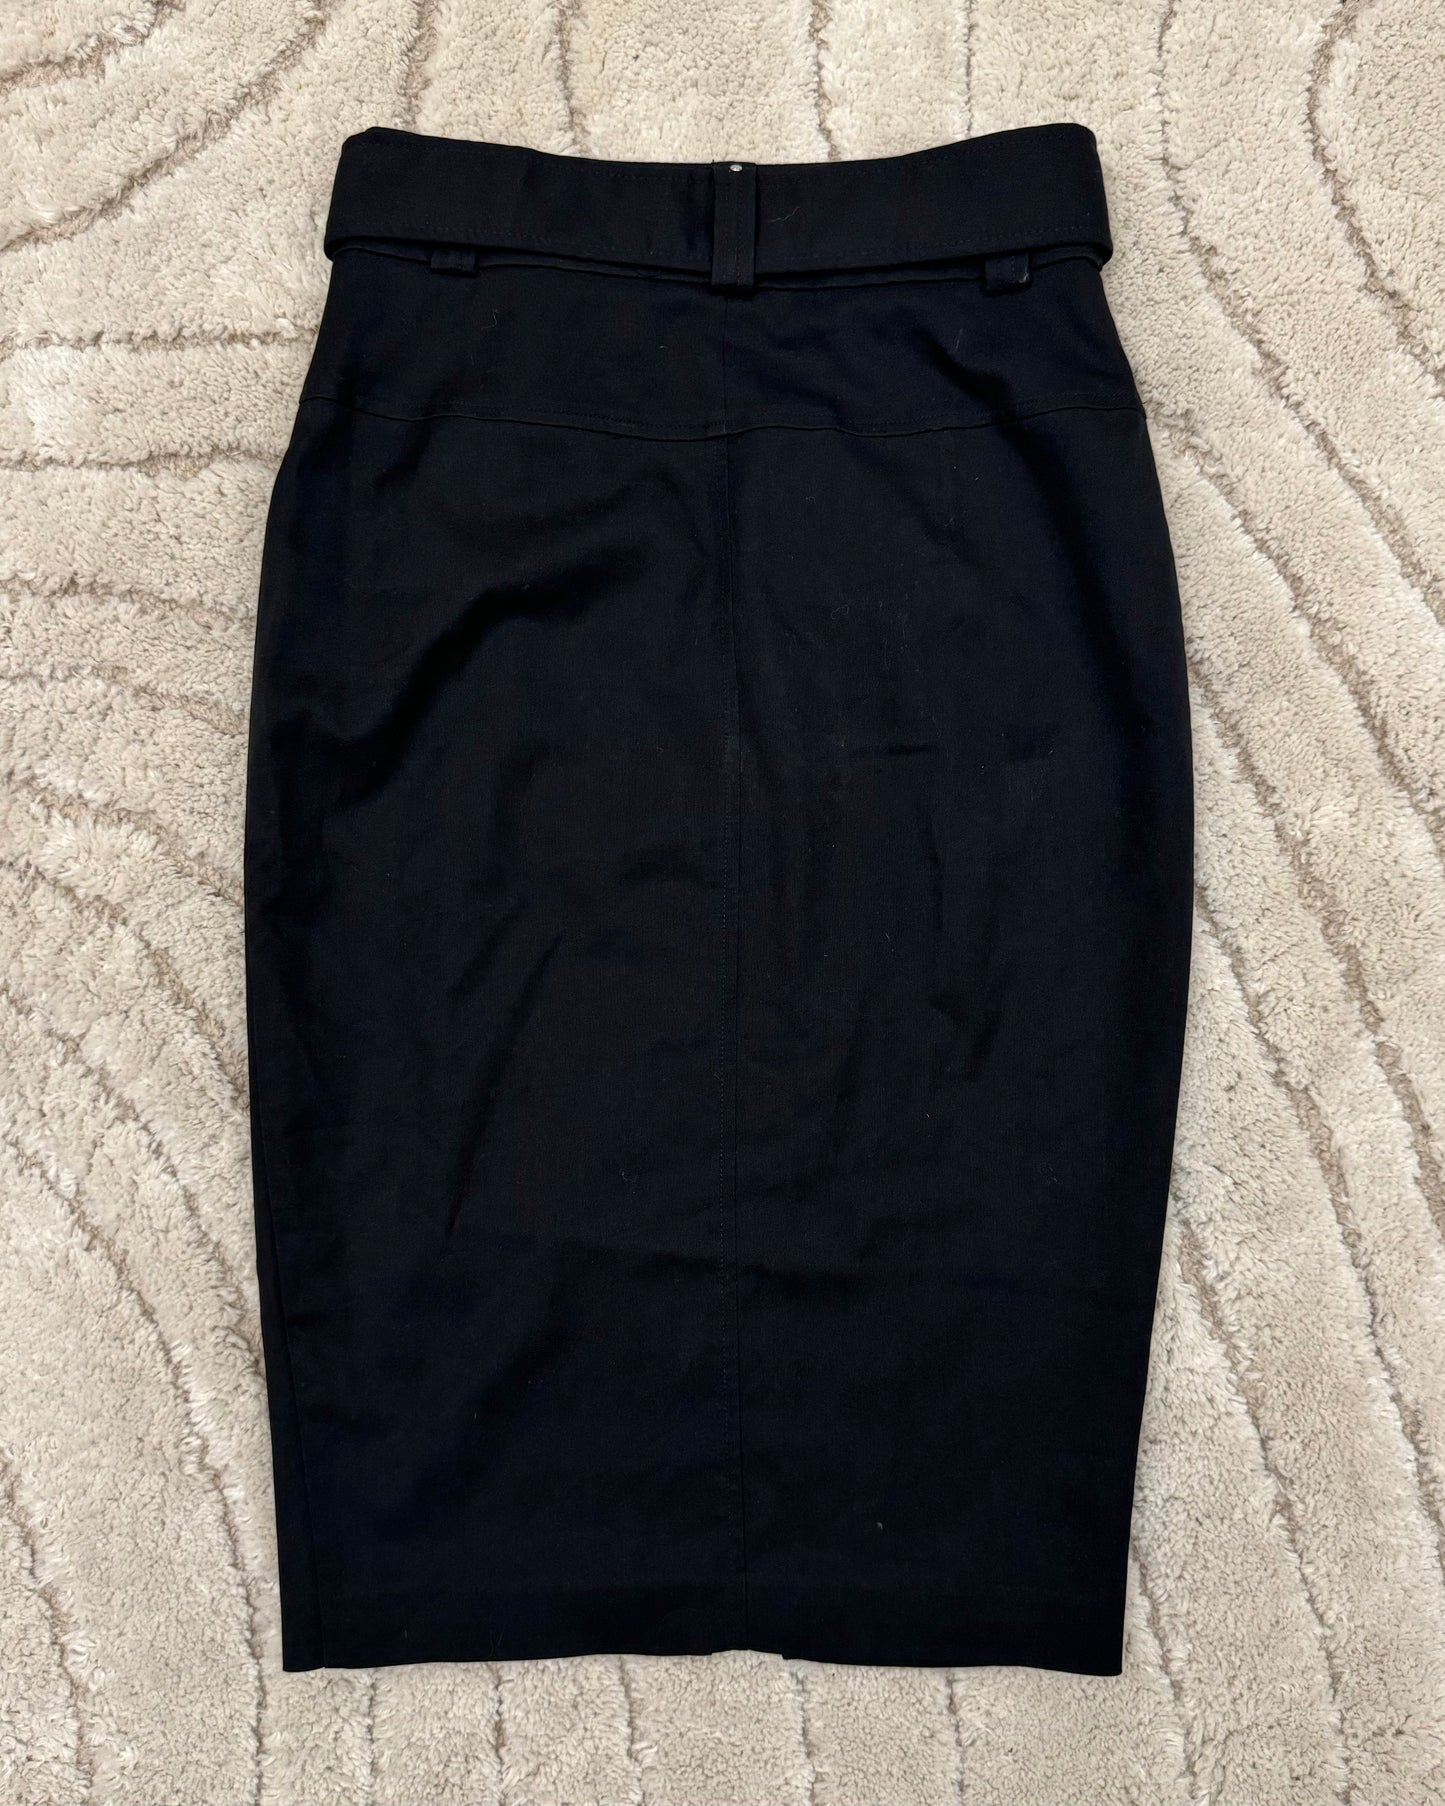 Jean Paul Gaultier x Lindex Utility Skirt (XS)